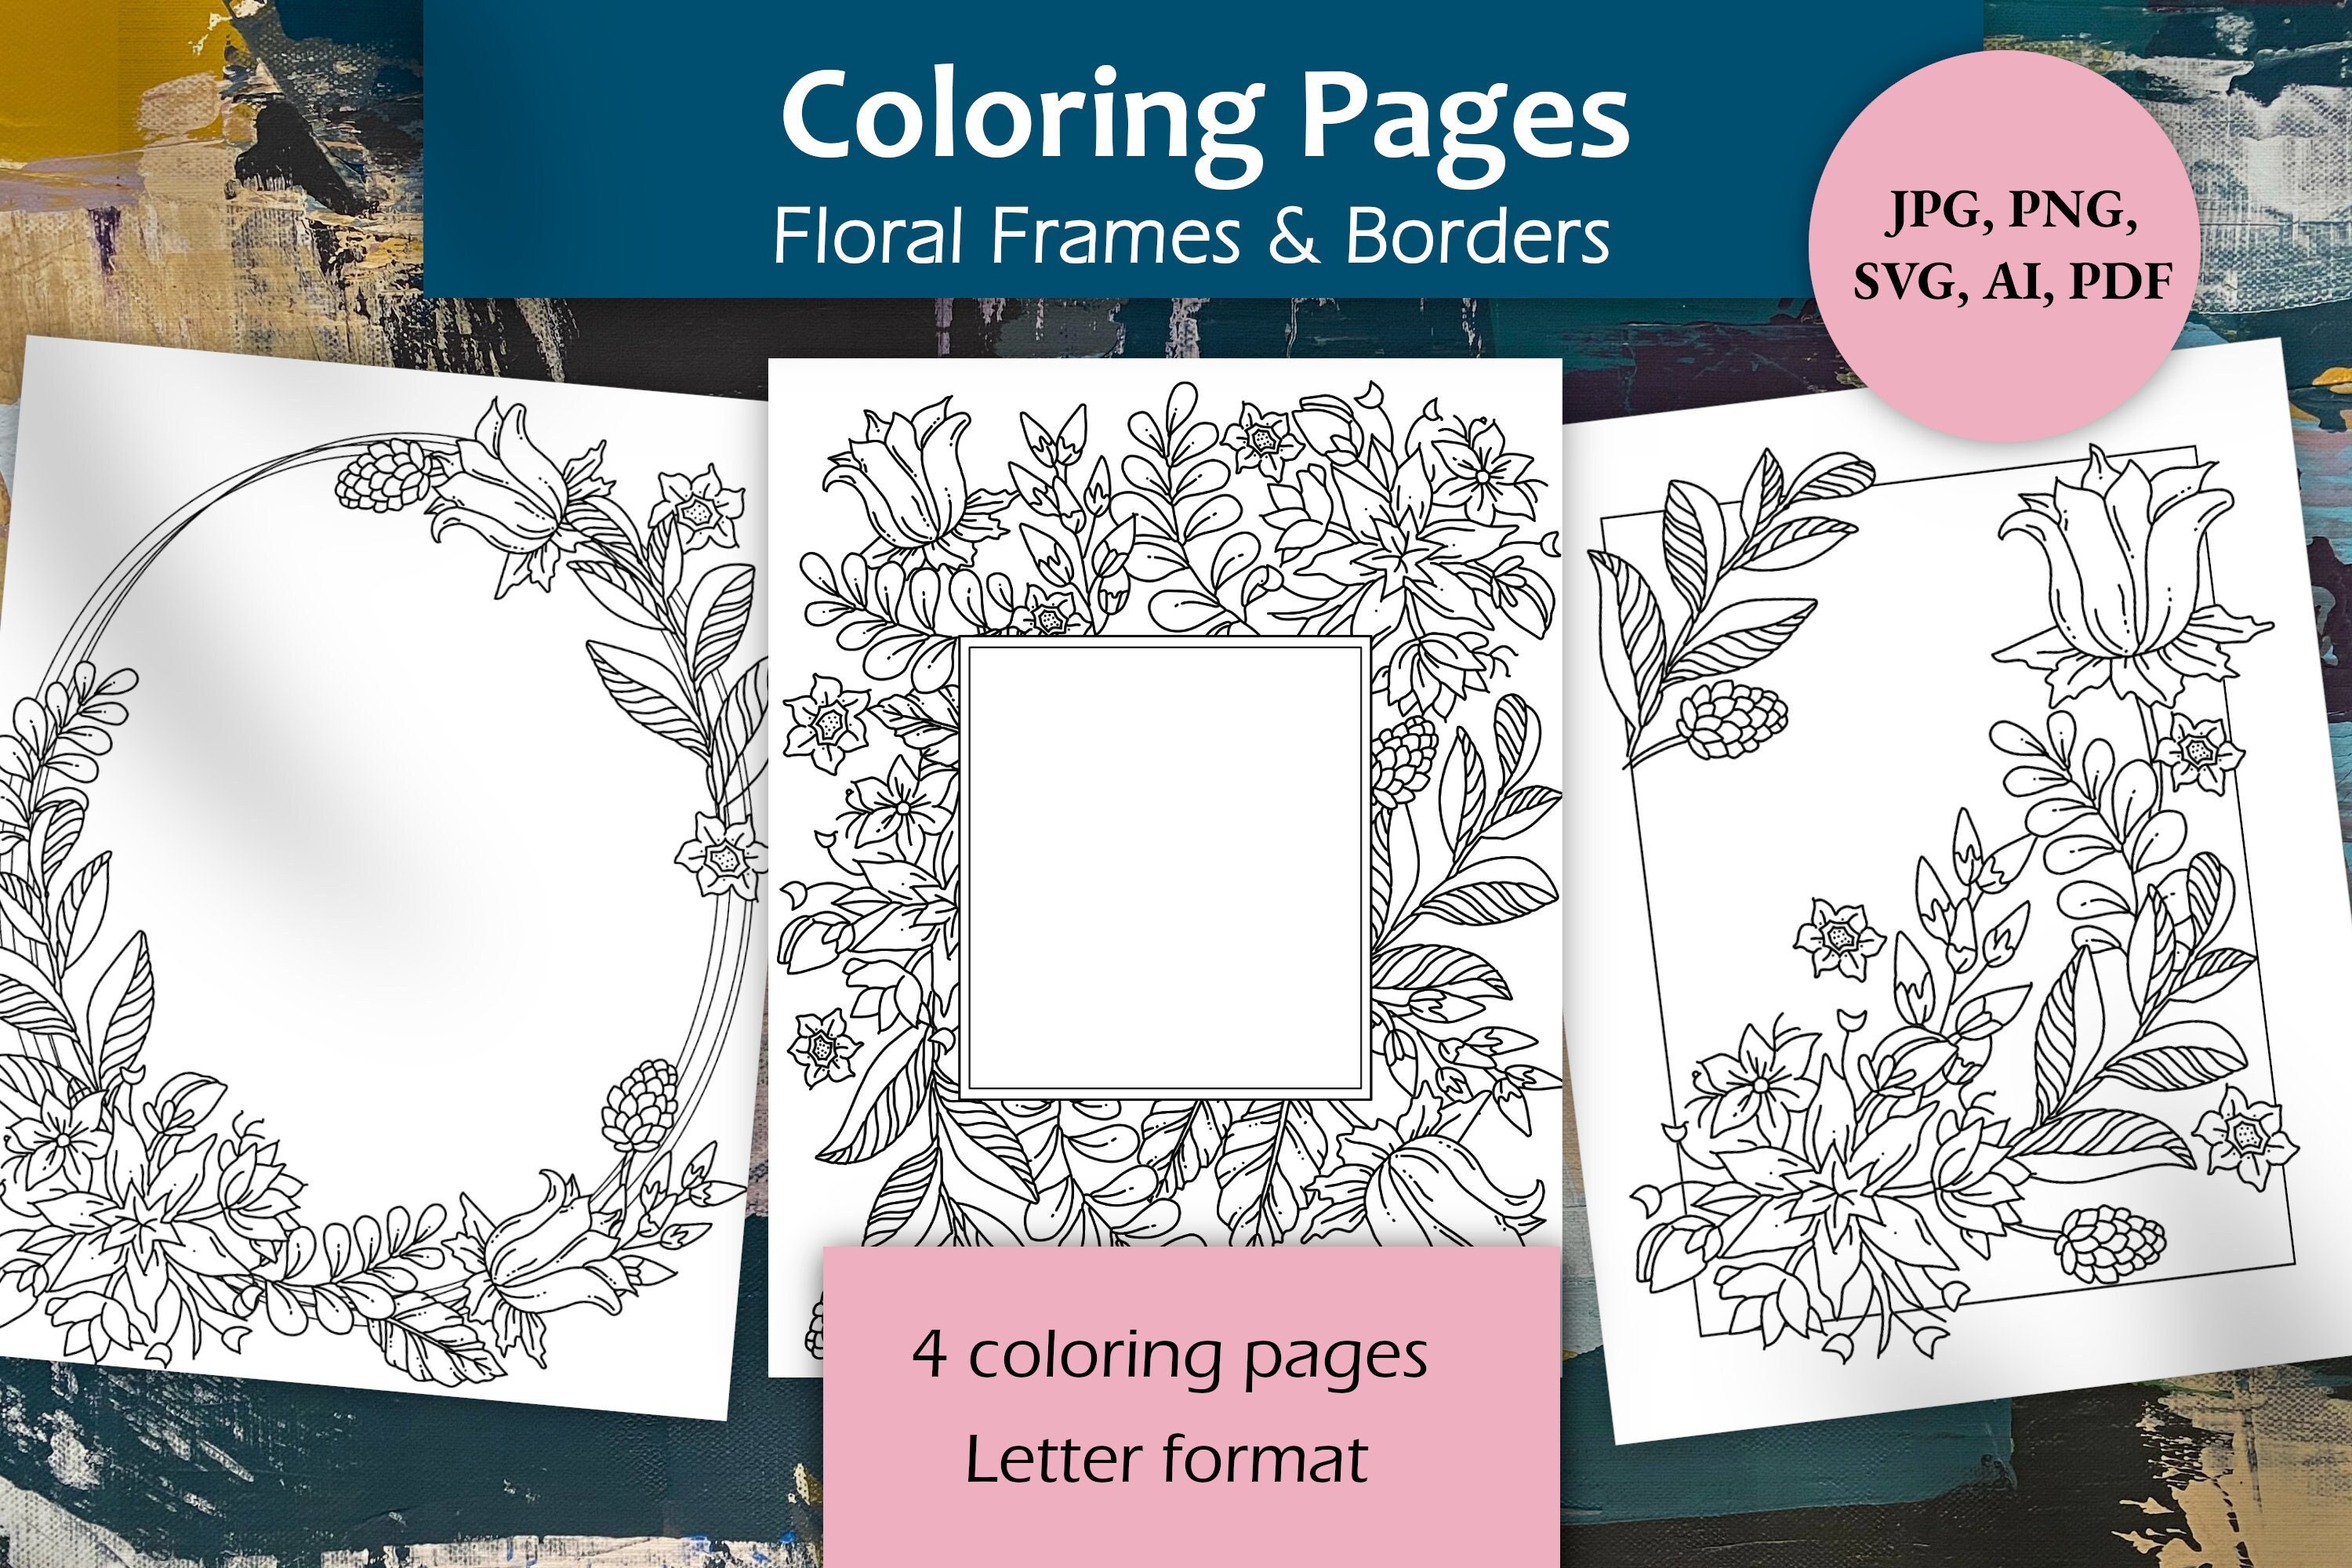 Floral Reverse Coloring Book KDP Interior Canva PLR Bundle